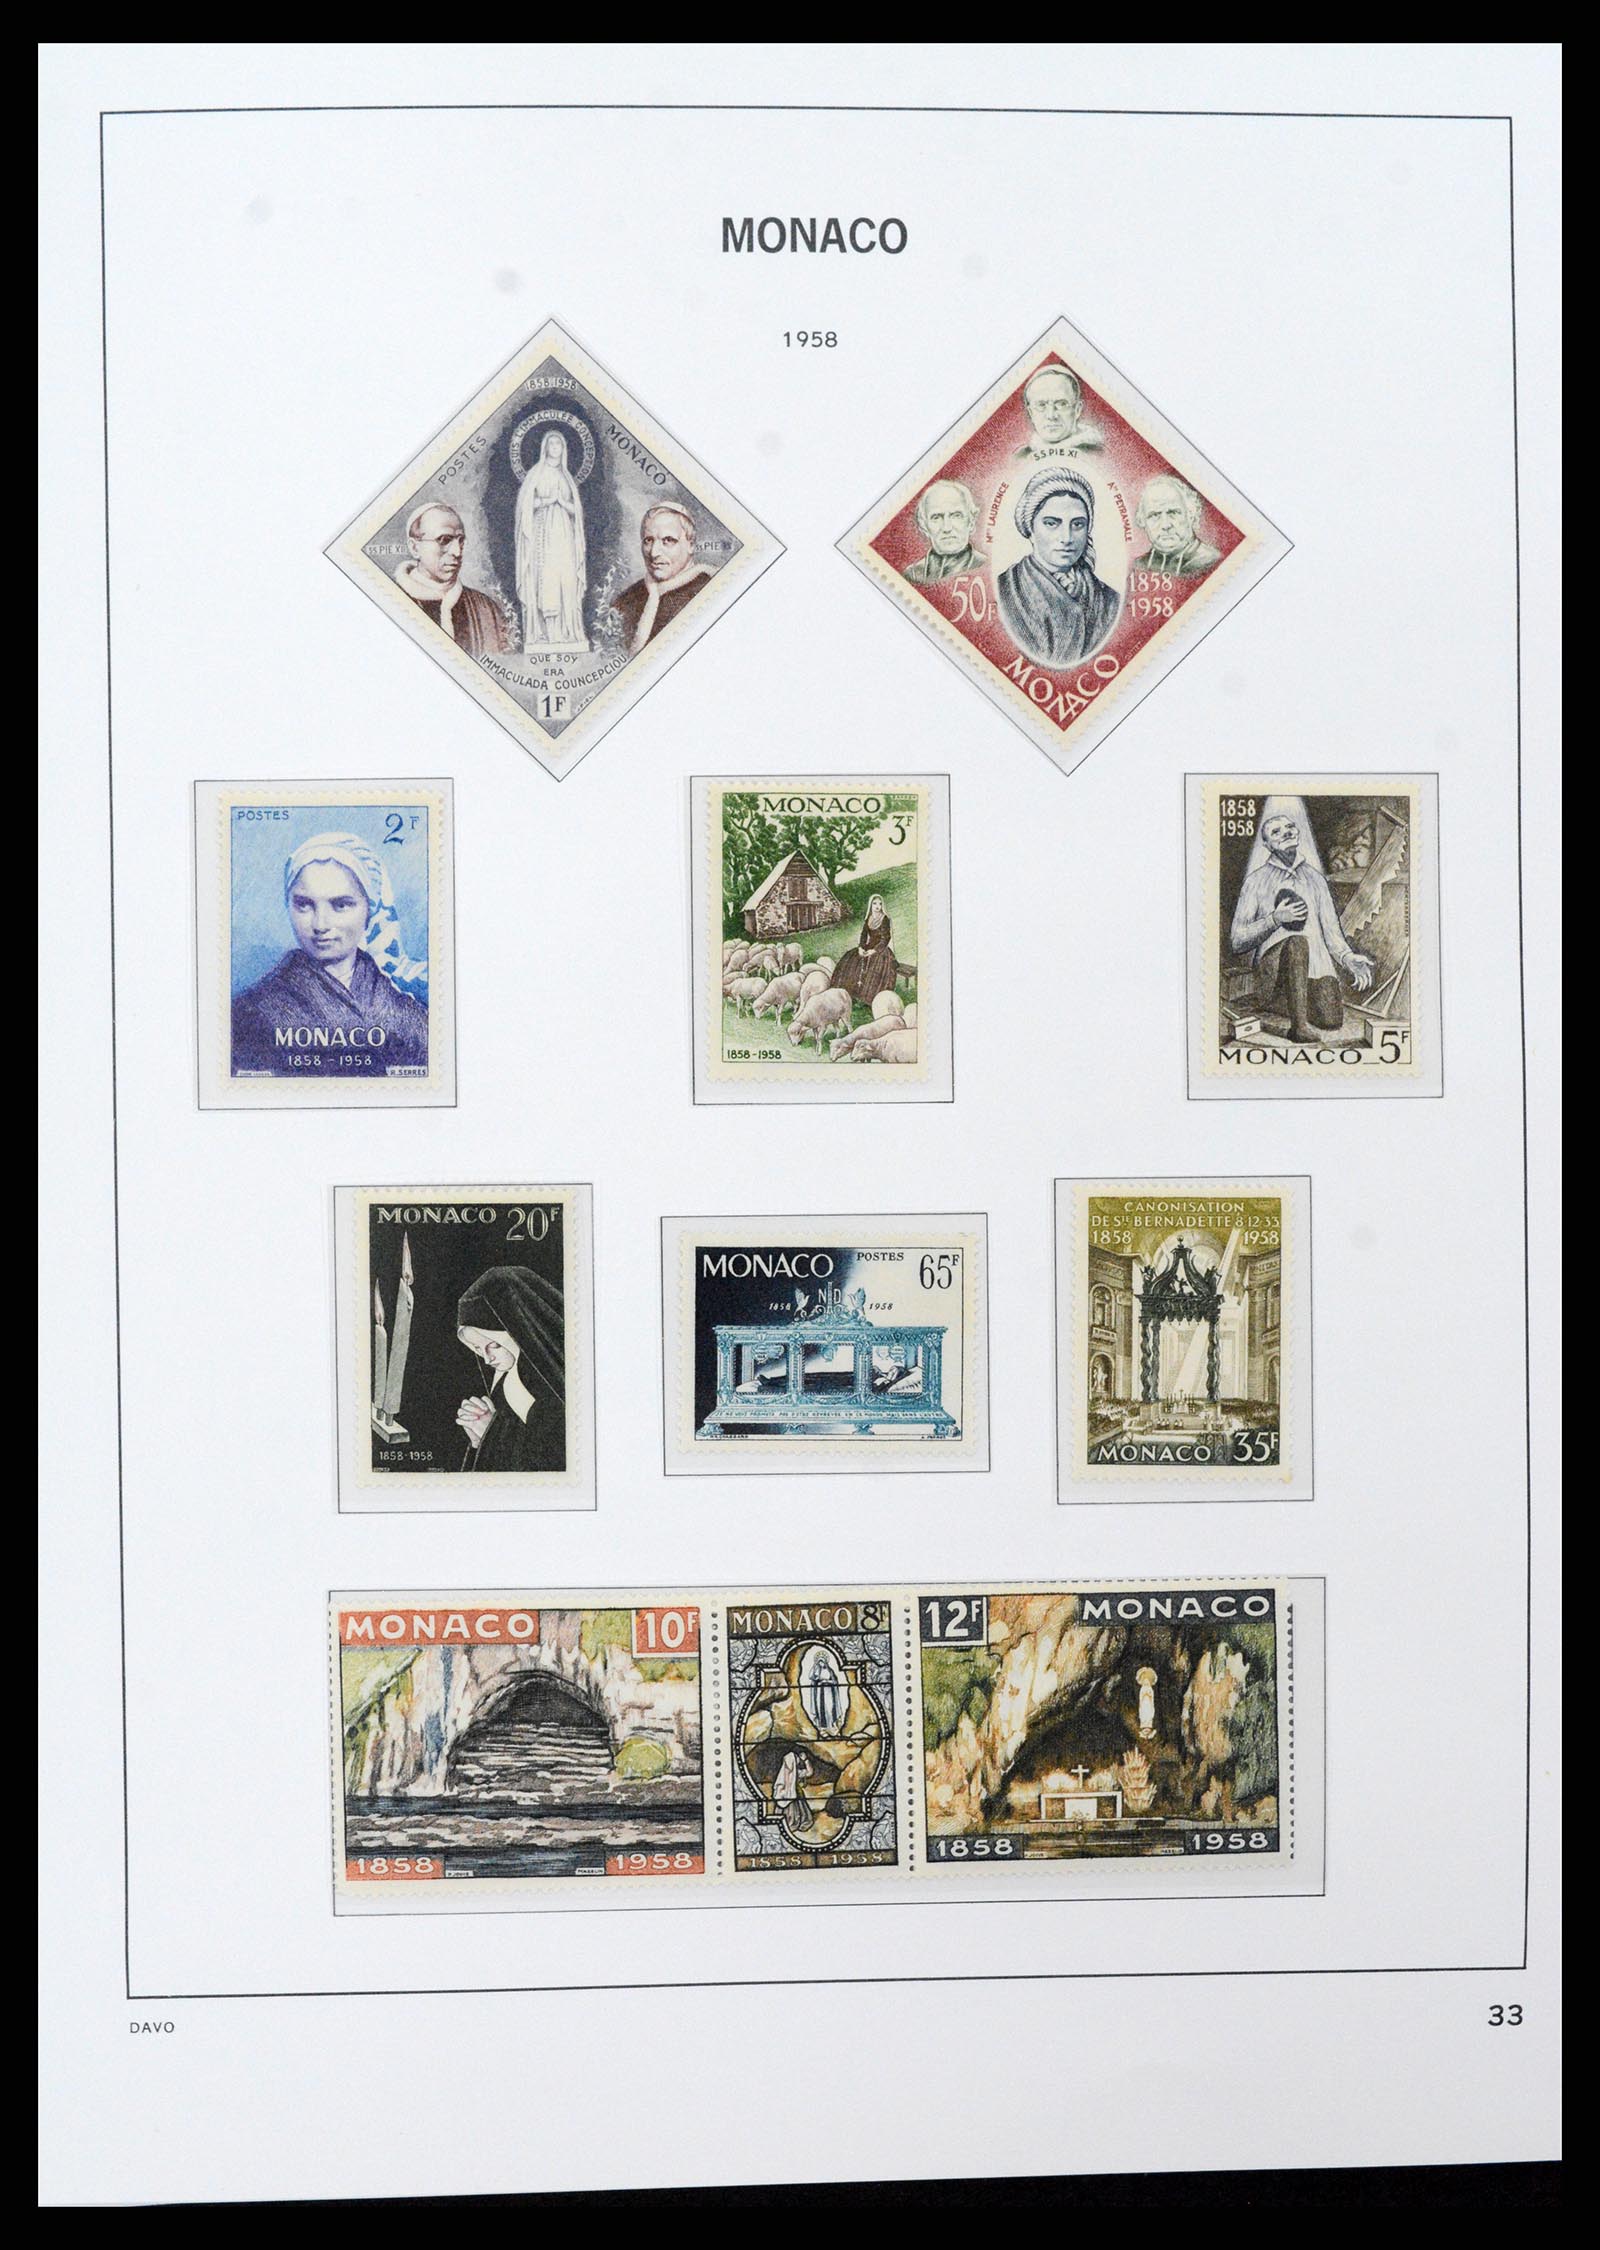 37279 033 - Stamp collection 37279 Monaco 1885-1969.